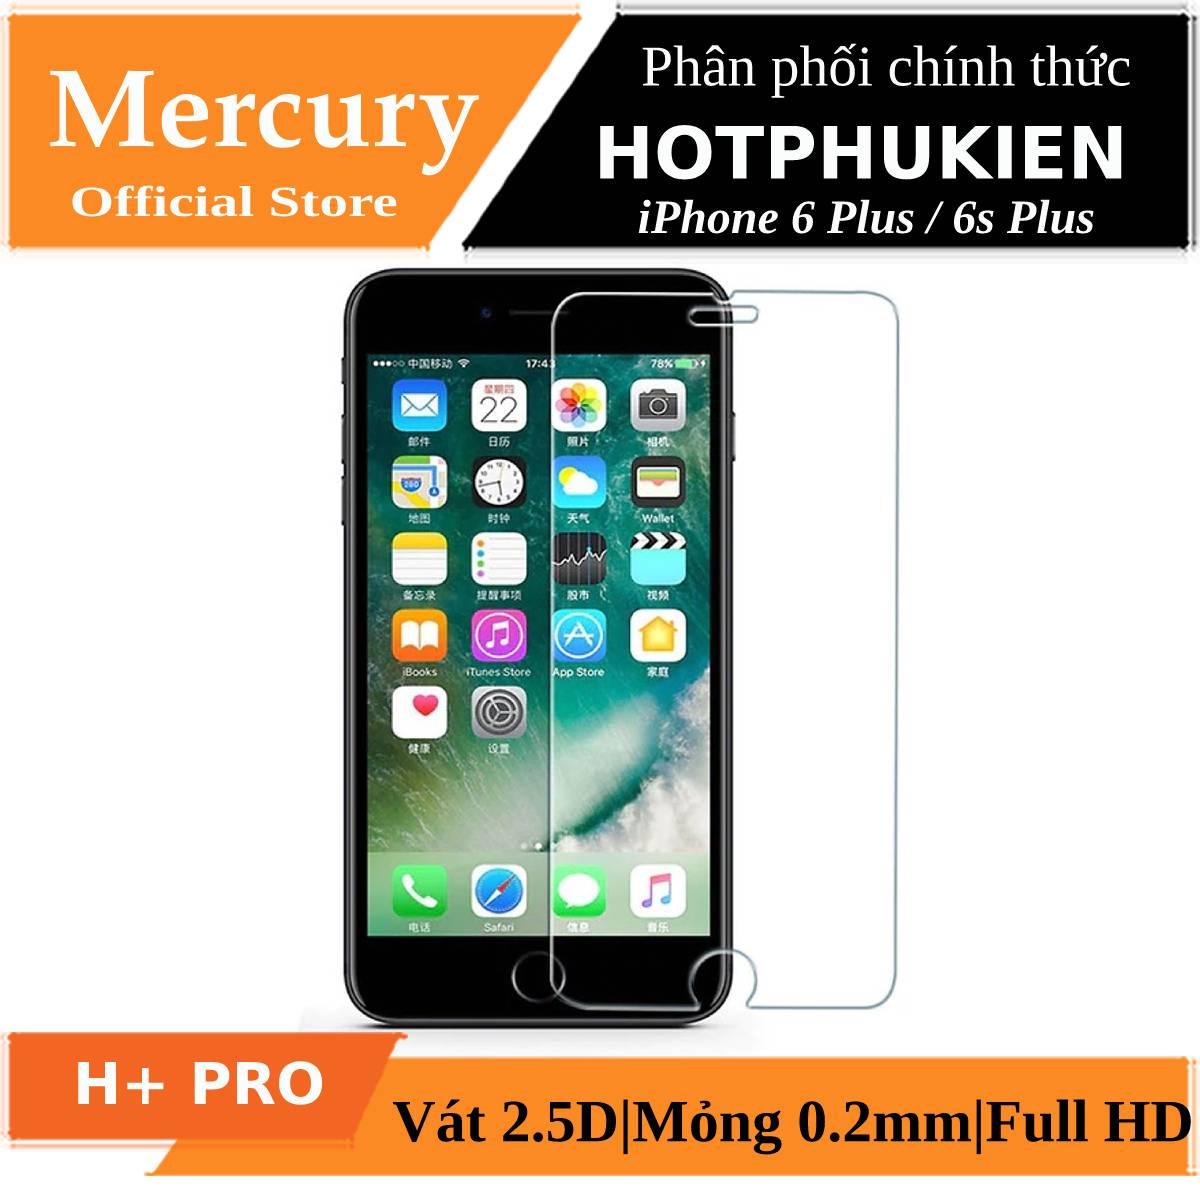 Miếng dán kính cường lực Mercury H+ Pro cho iPhone 6 Plus / iPhone 6s Plus